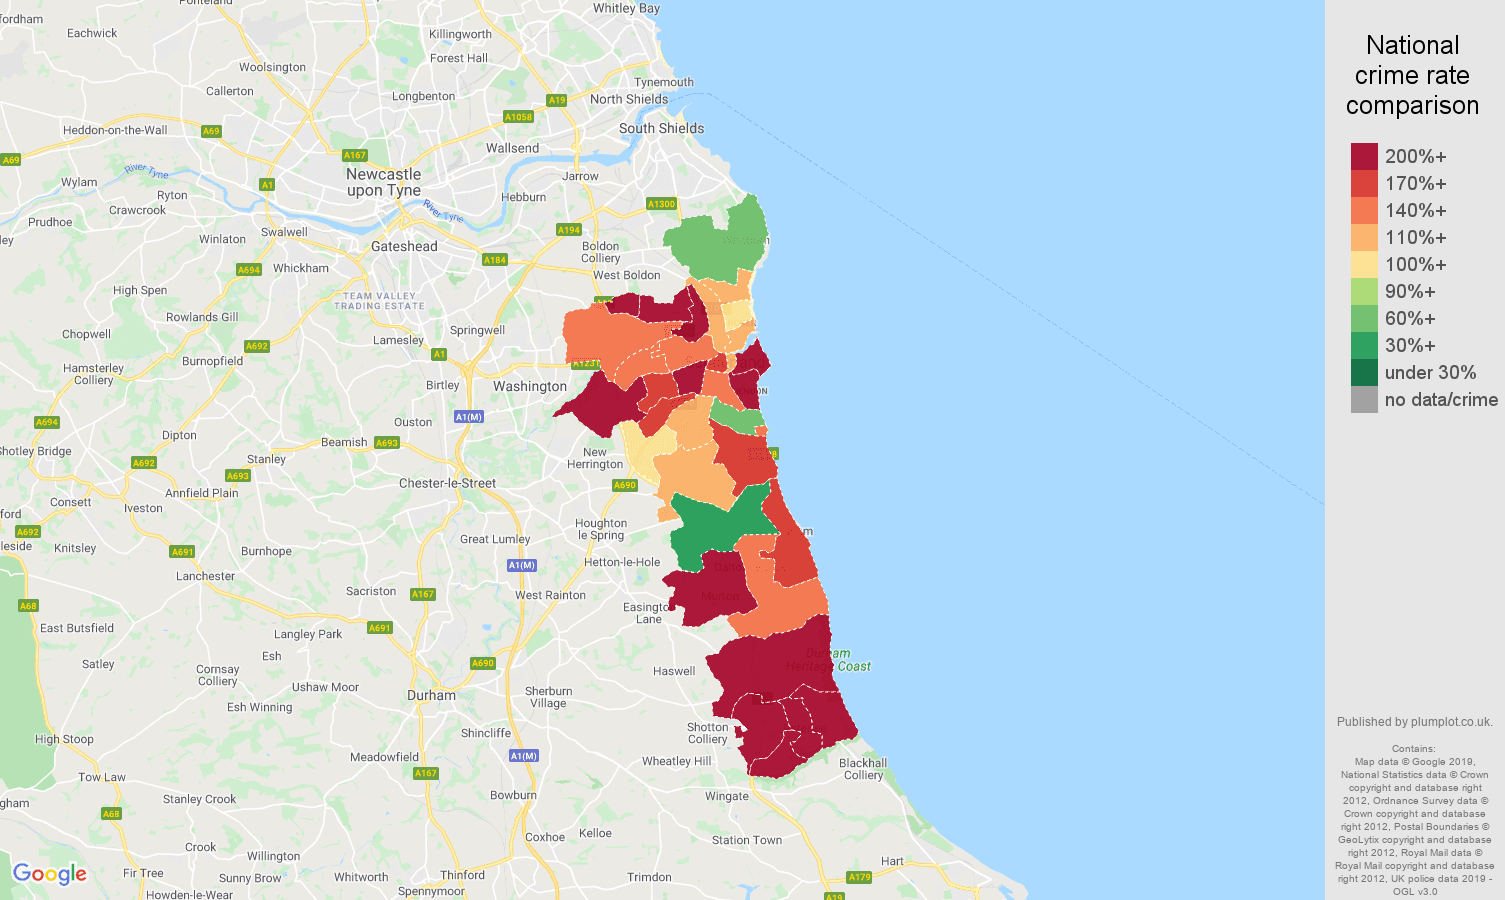 Sunderland other crime rate comparison map